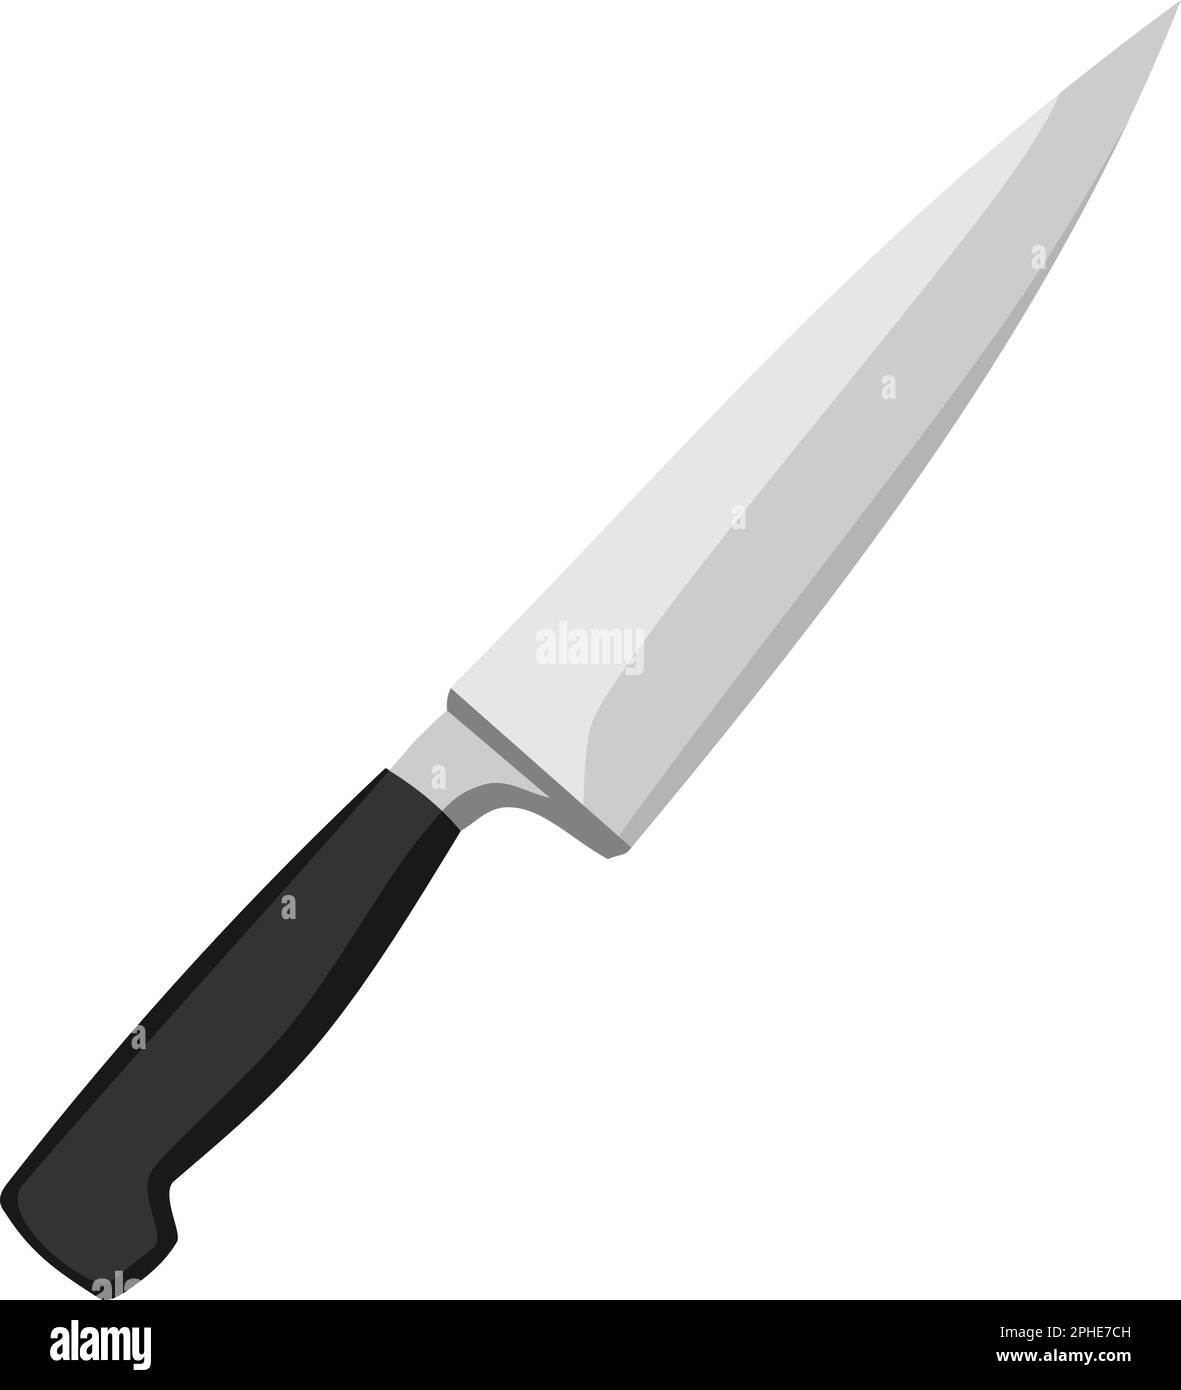 https://c8.alamy.com/comp/2PHE7CH/knife-tool-cook-cut-vector-2PHE7CH.jpg